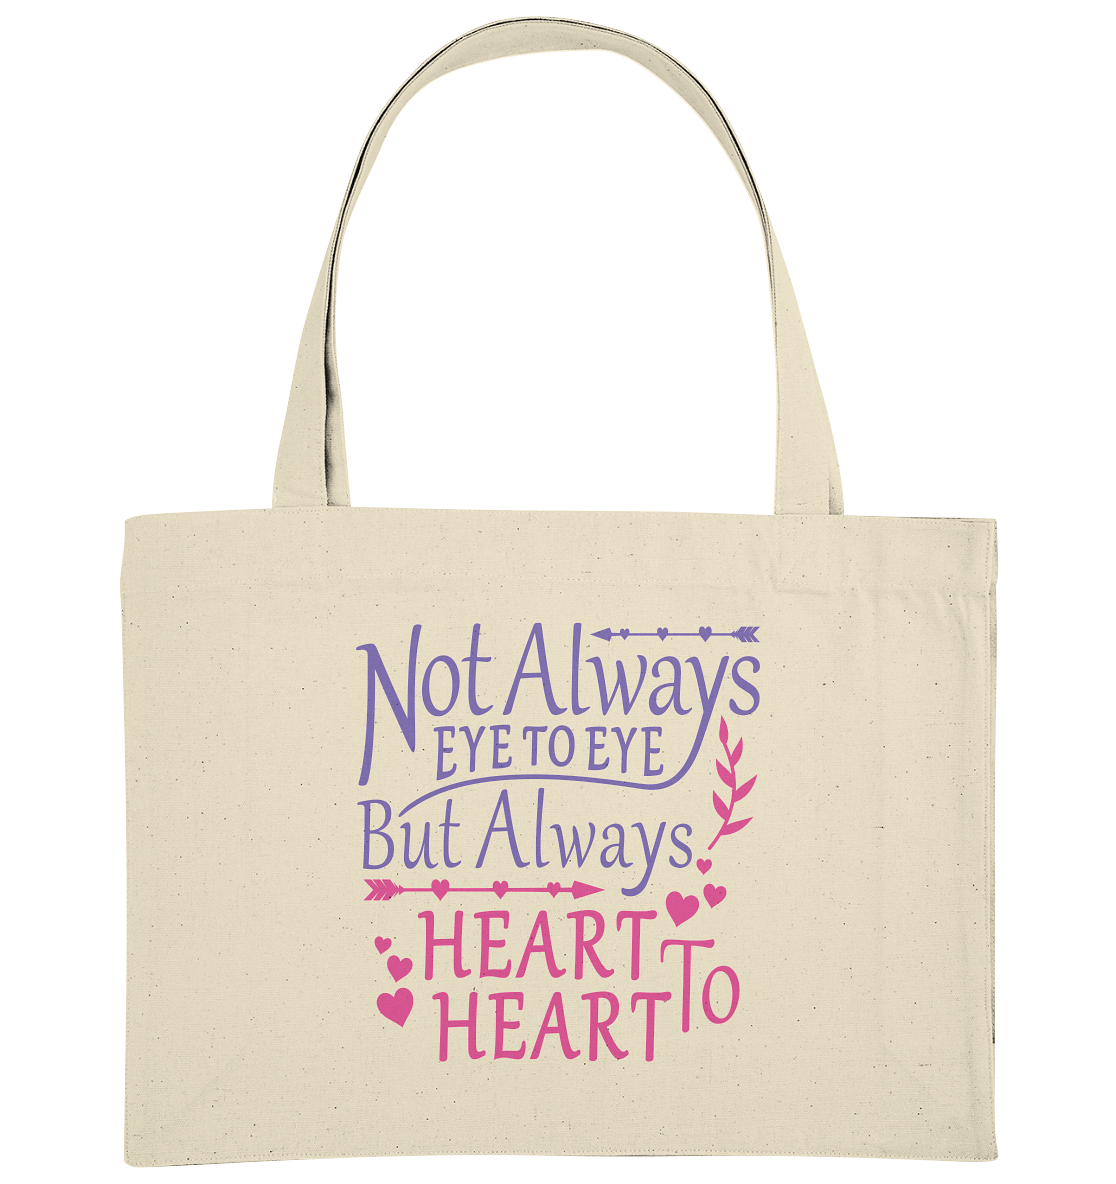 Not always eye to eye but always heart to heart - organic shopping bag